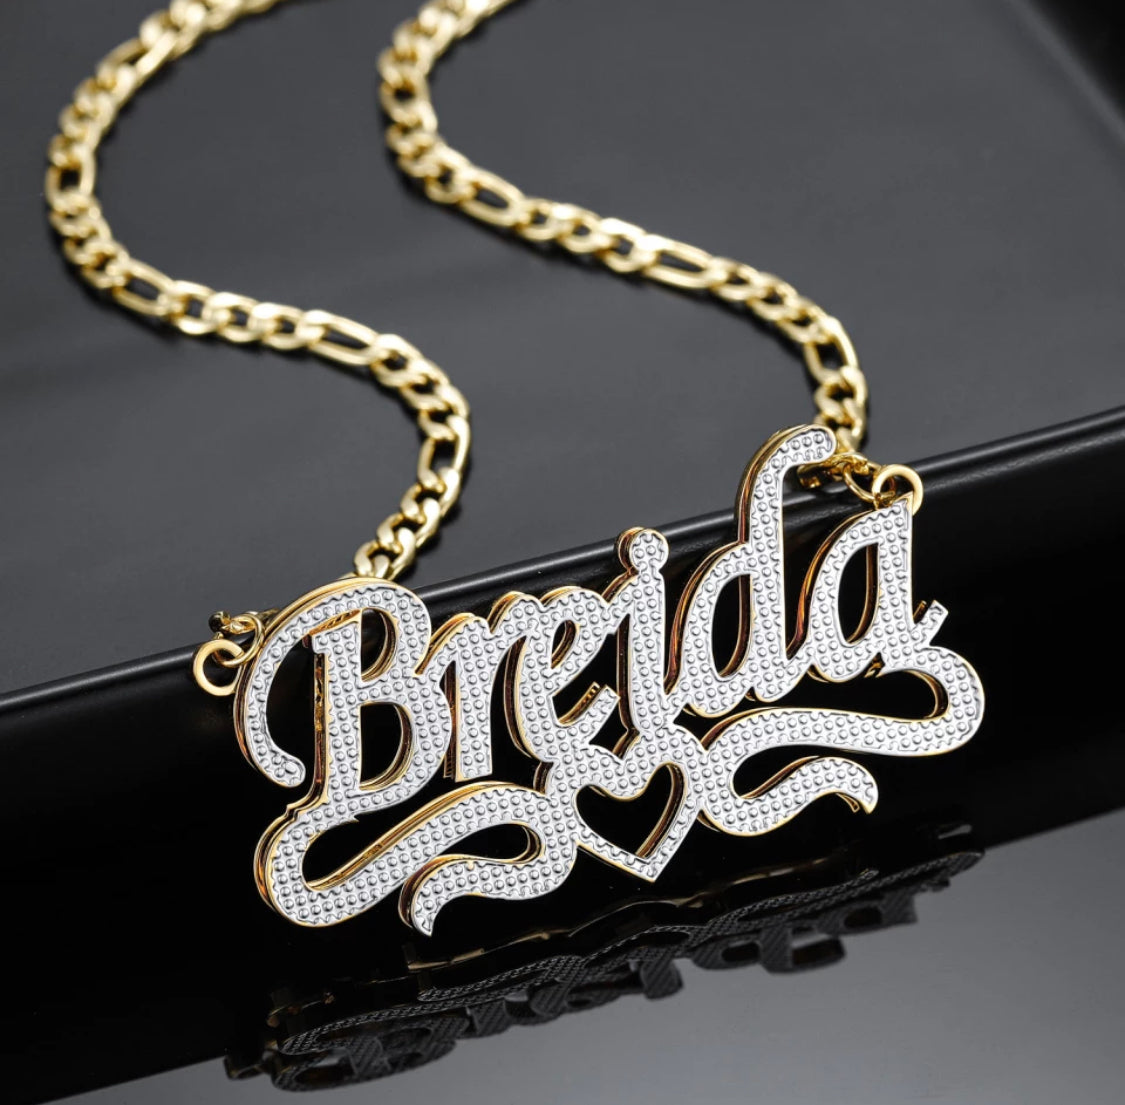 The Breida Necklace